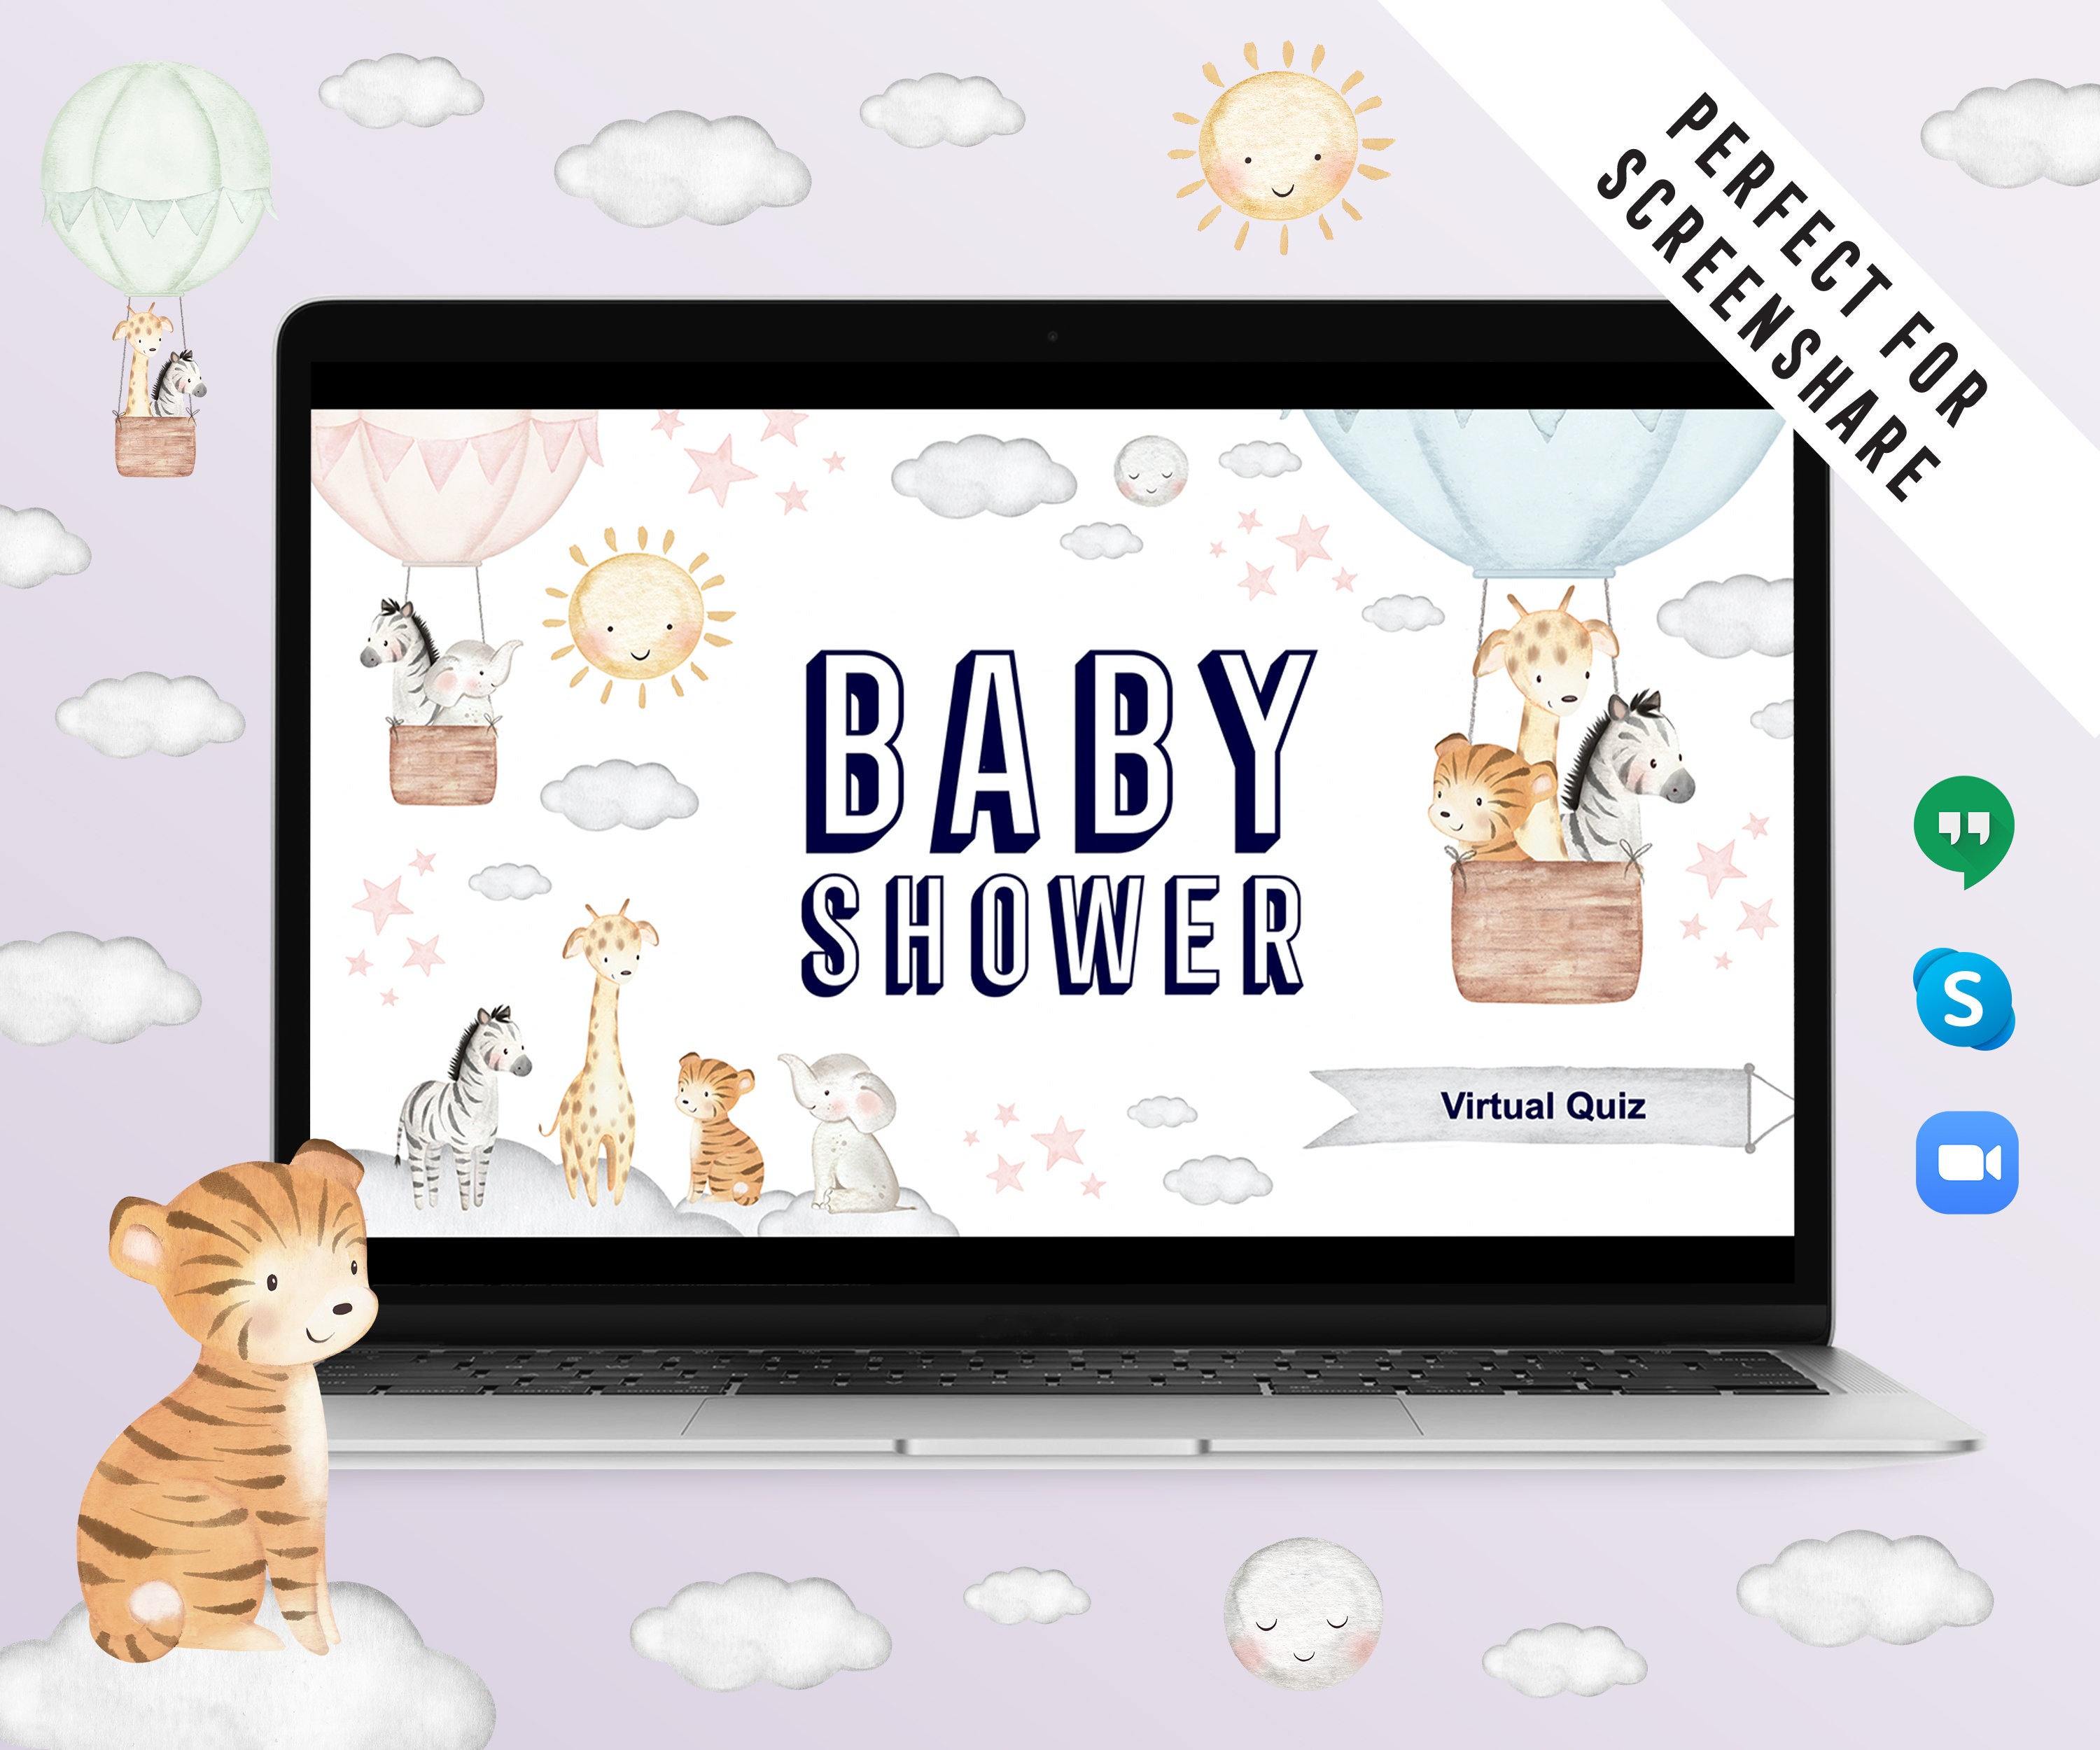 Benike Boutique: A Baby (boy) Shower  Online baby shower, Baby shower fun,  Virtual baby shower ideas